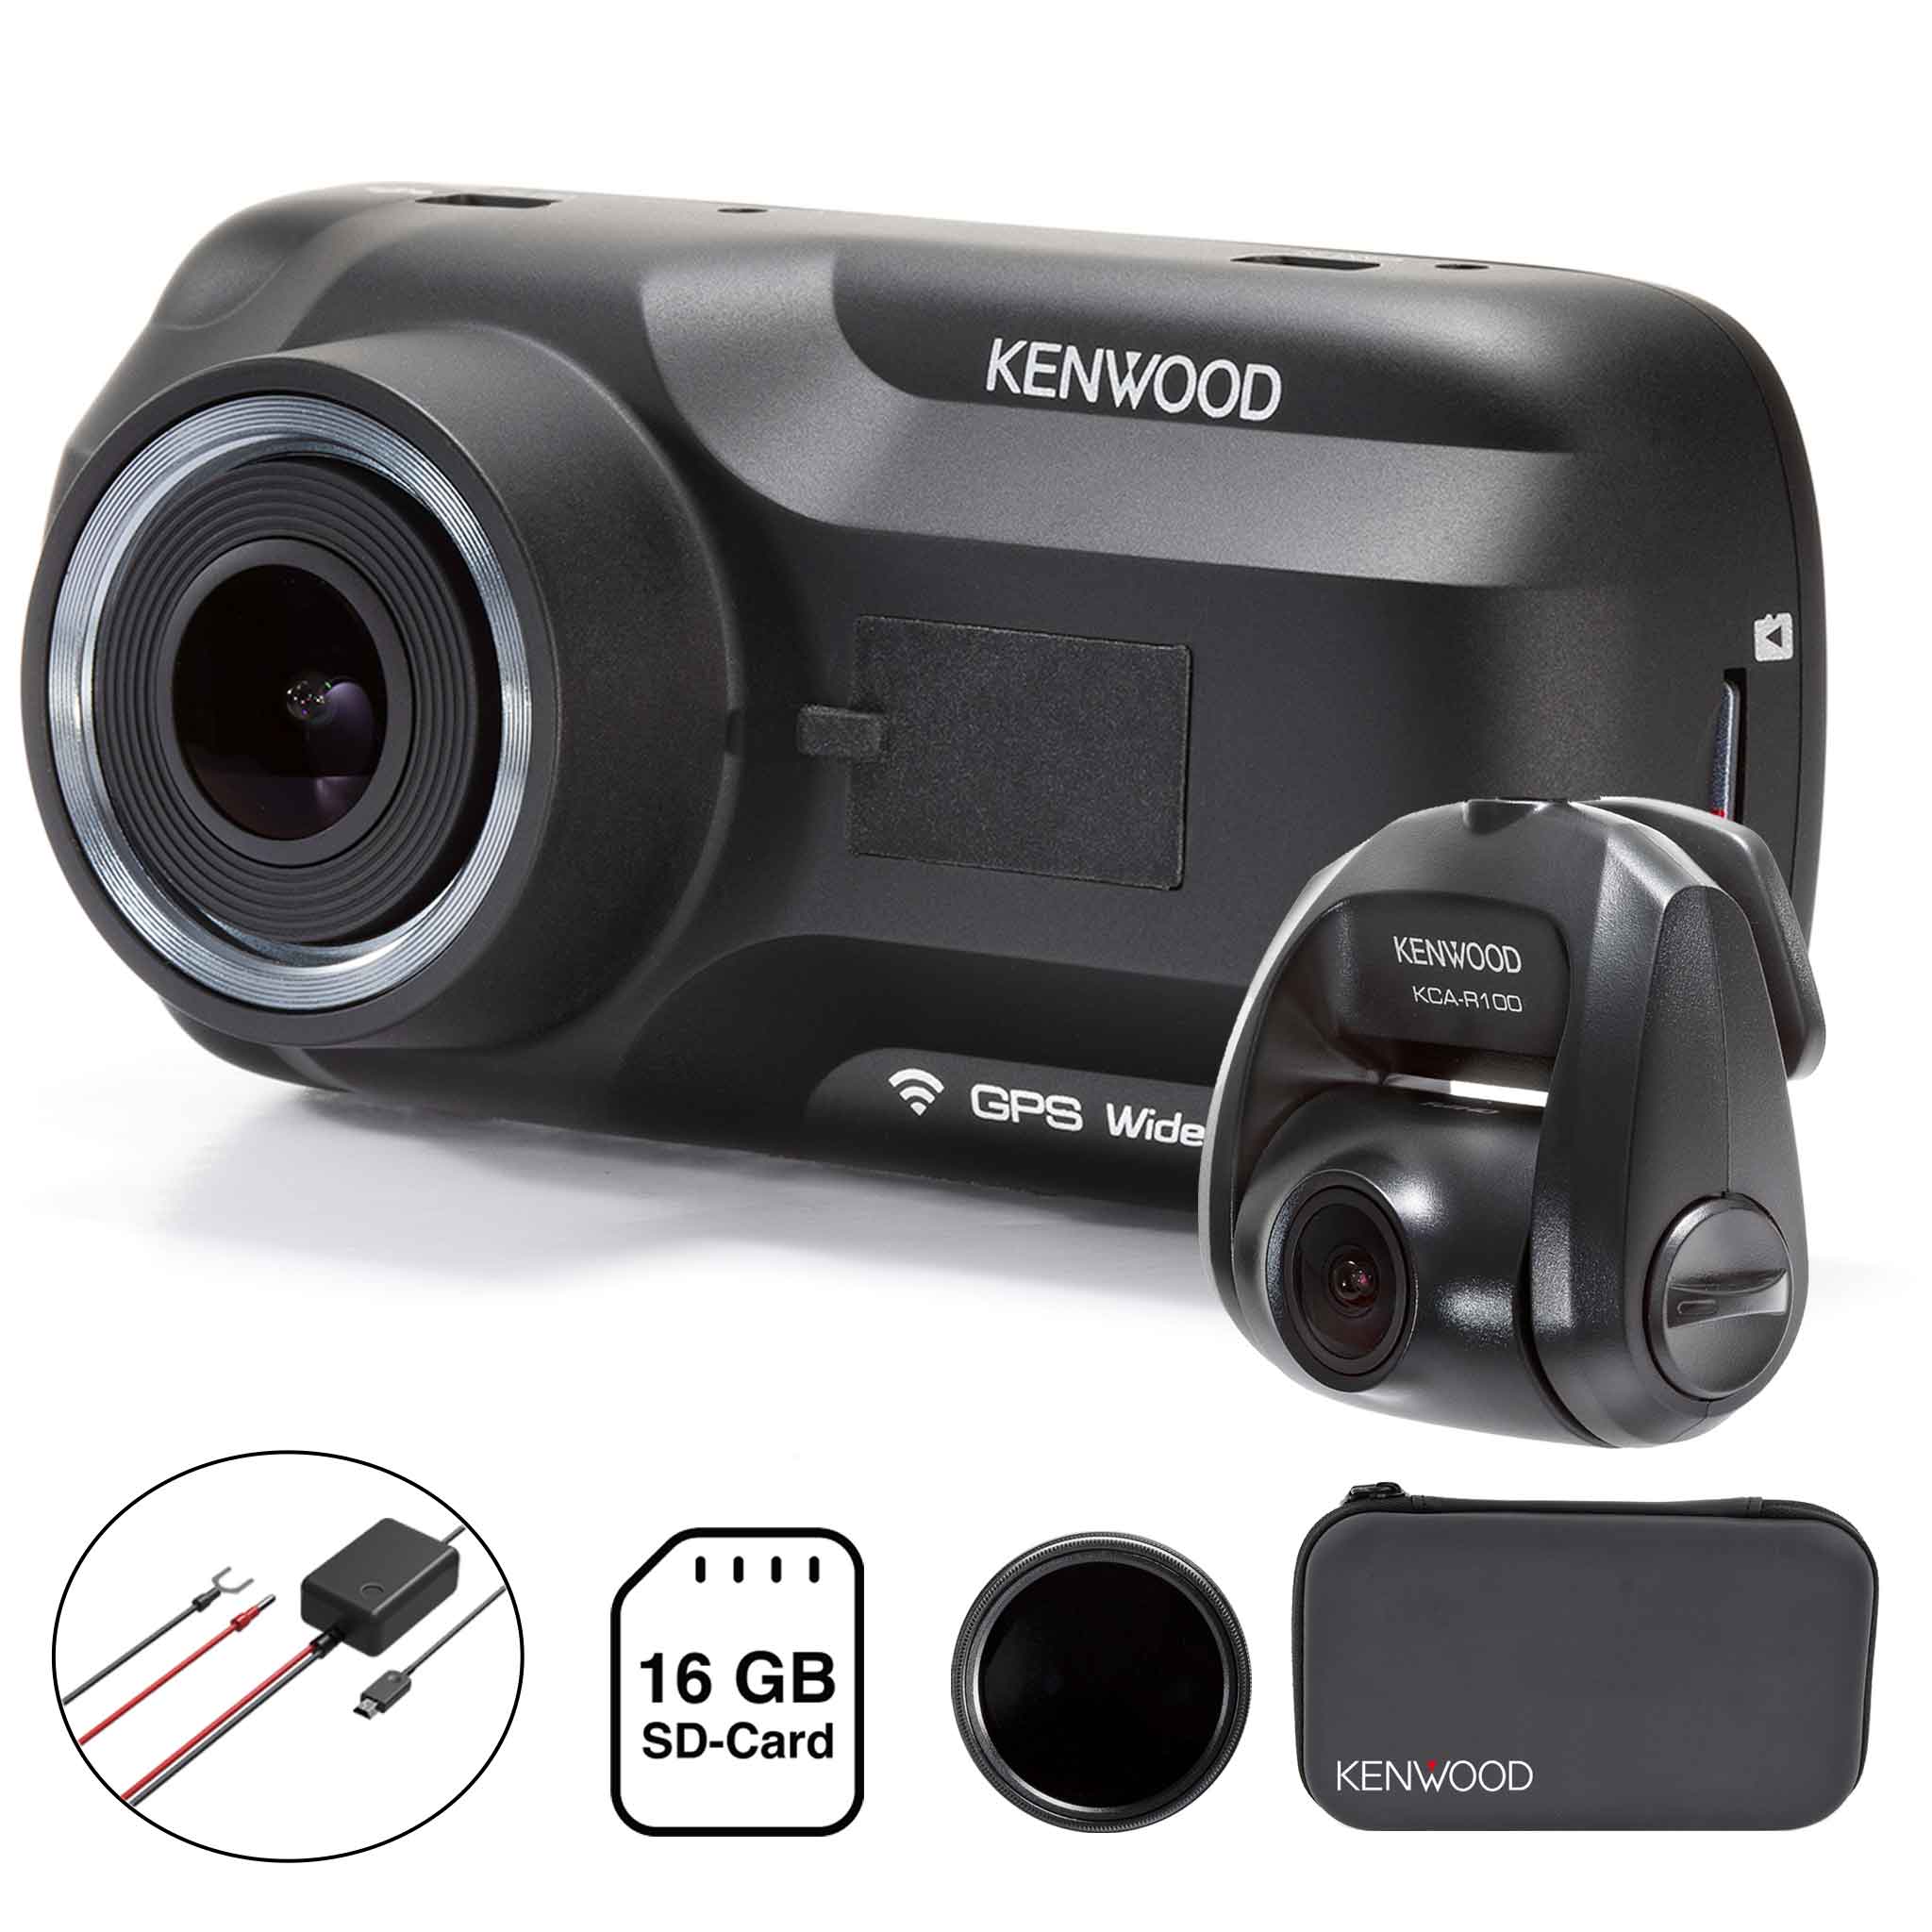 DRV-A501W KENWOOD dashcam, KCA-R100 rear view camera, award, poarised filter, sd-card